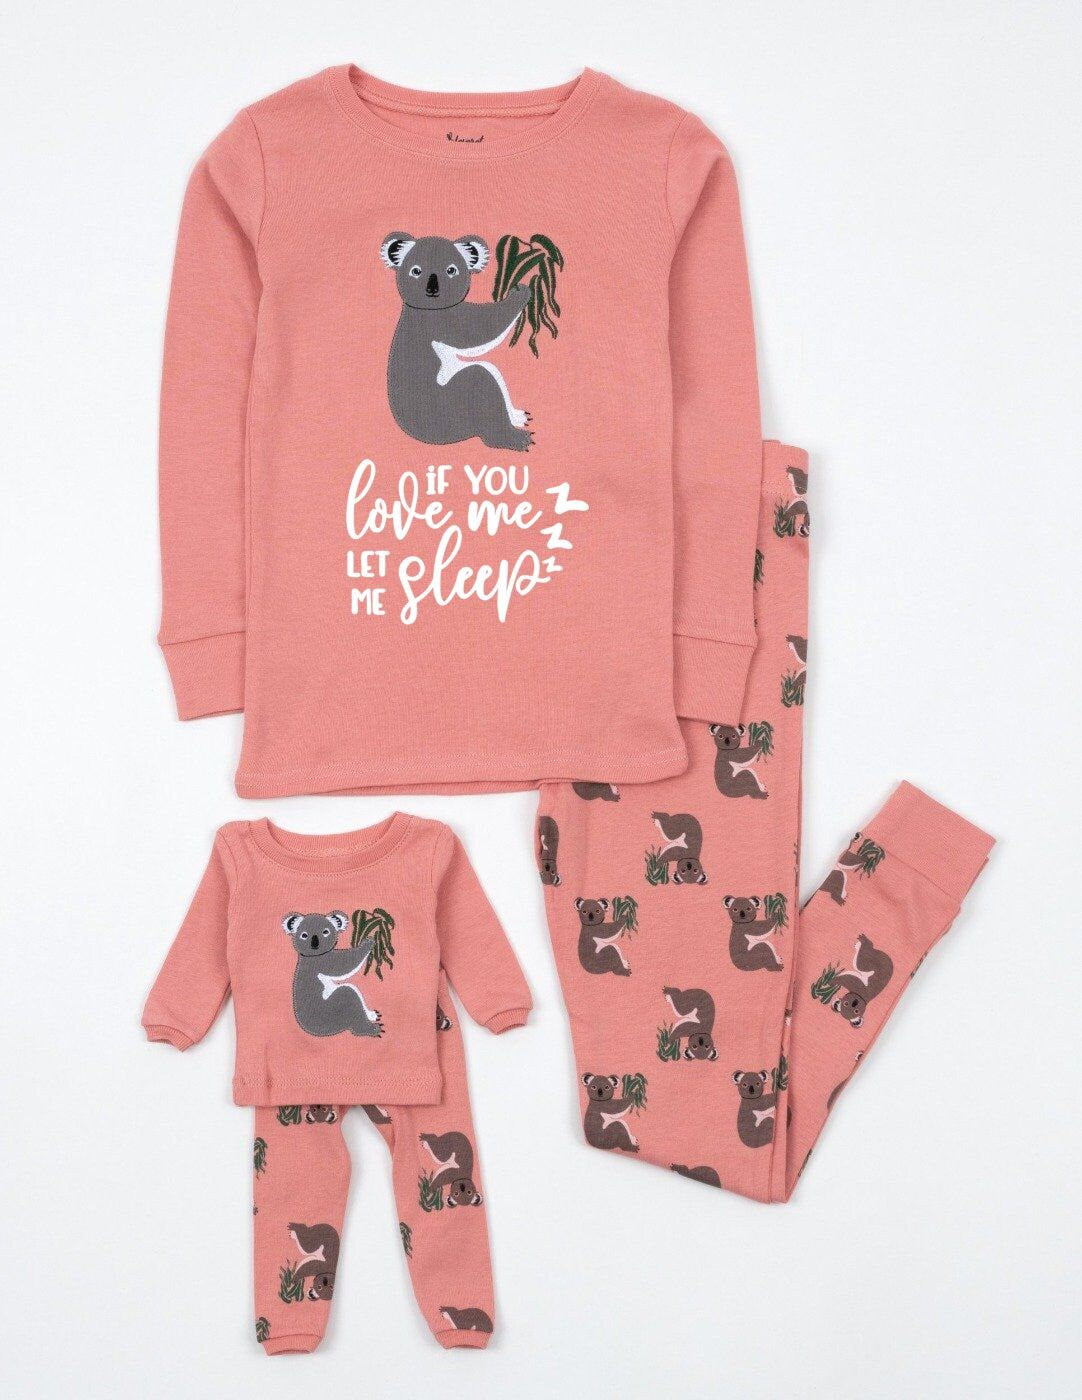 Koala If You Love Me Let Me Sleep Pajamas -  Matching Doll Pajamas - Koala Lover Gift - Kids Pajama Set - Cotton Pajamas for Toddlers